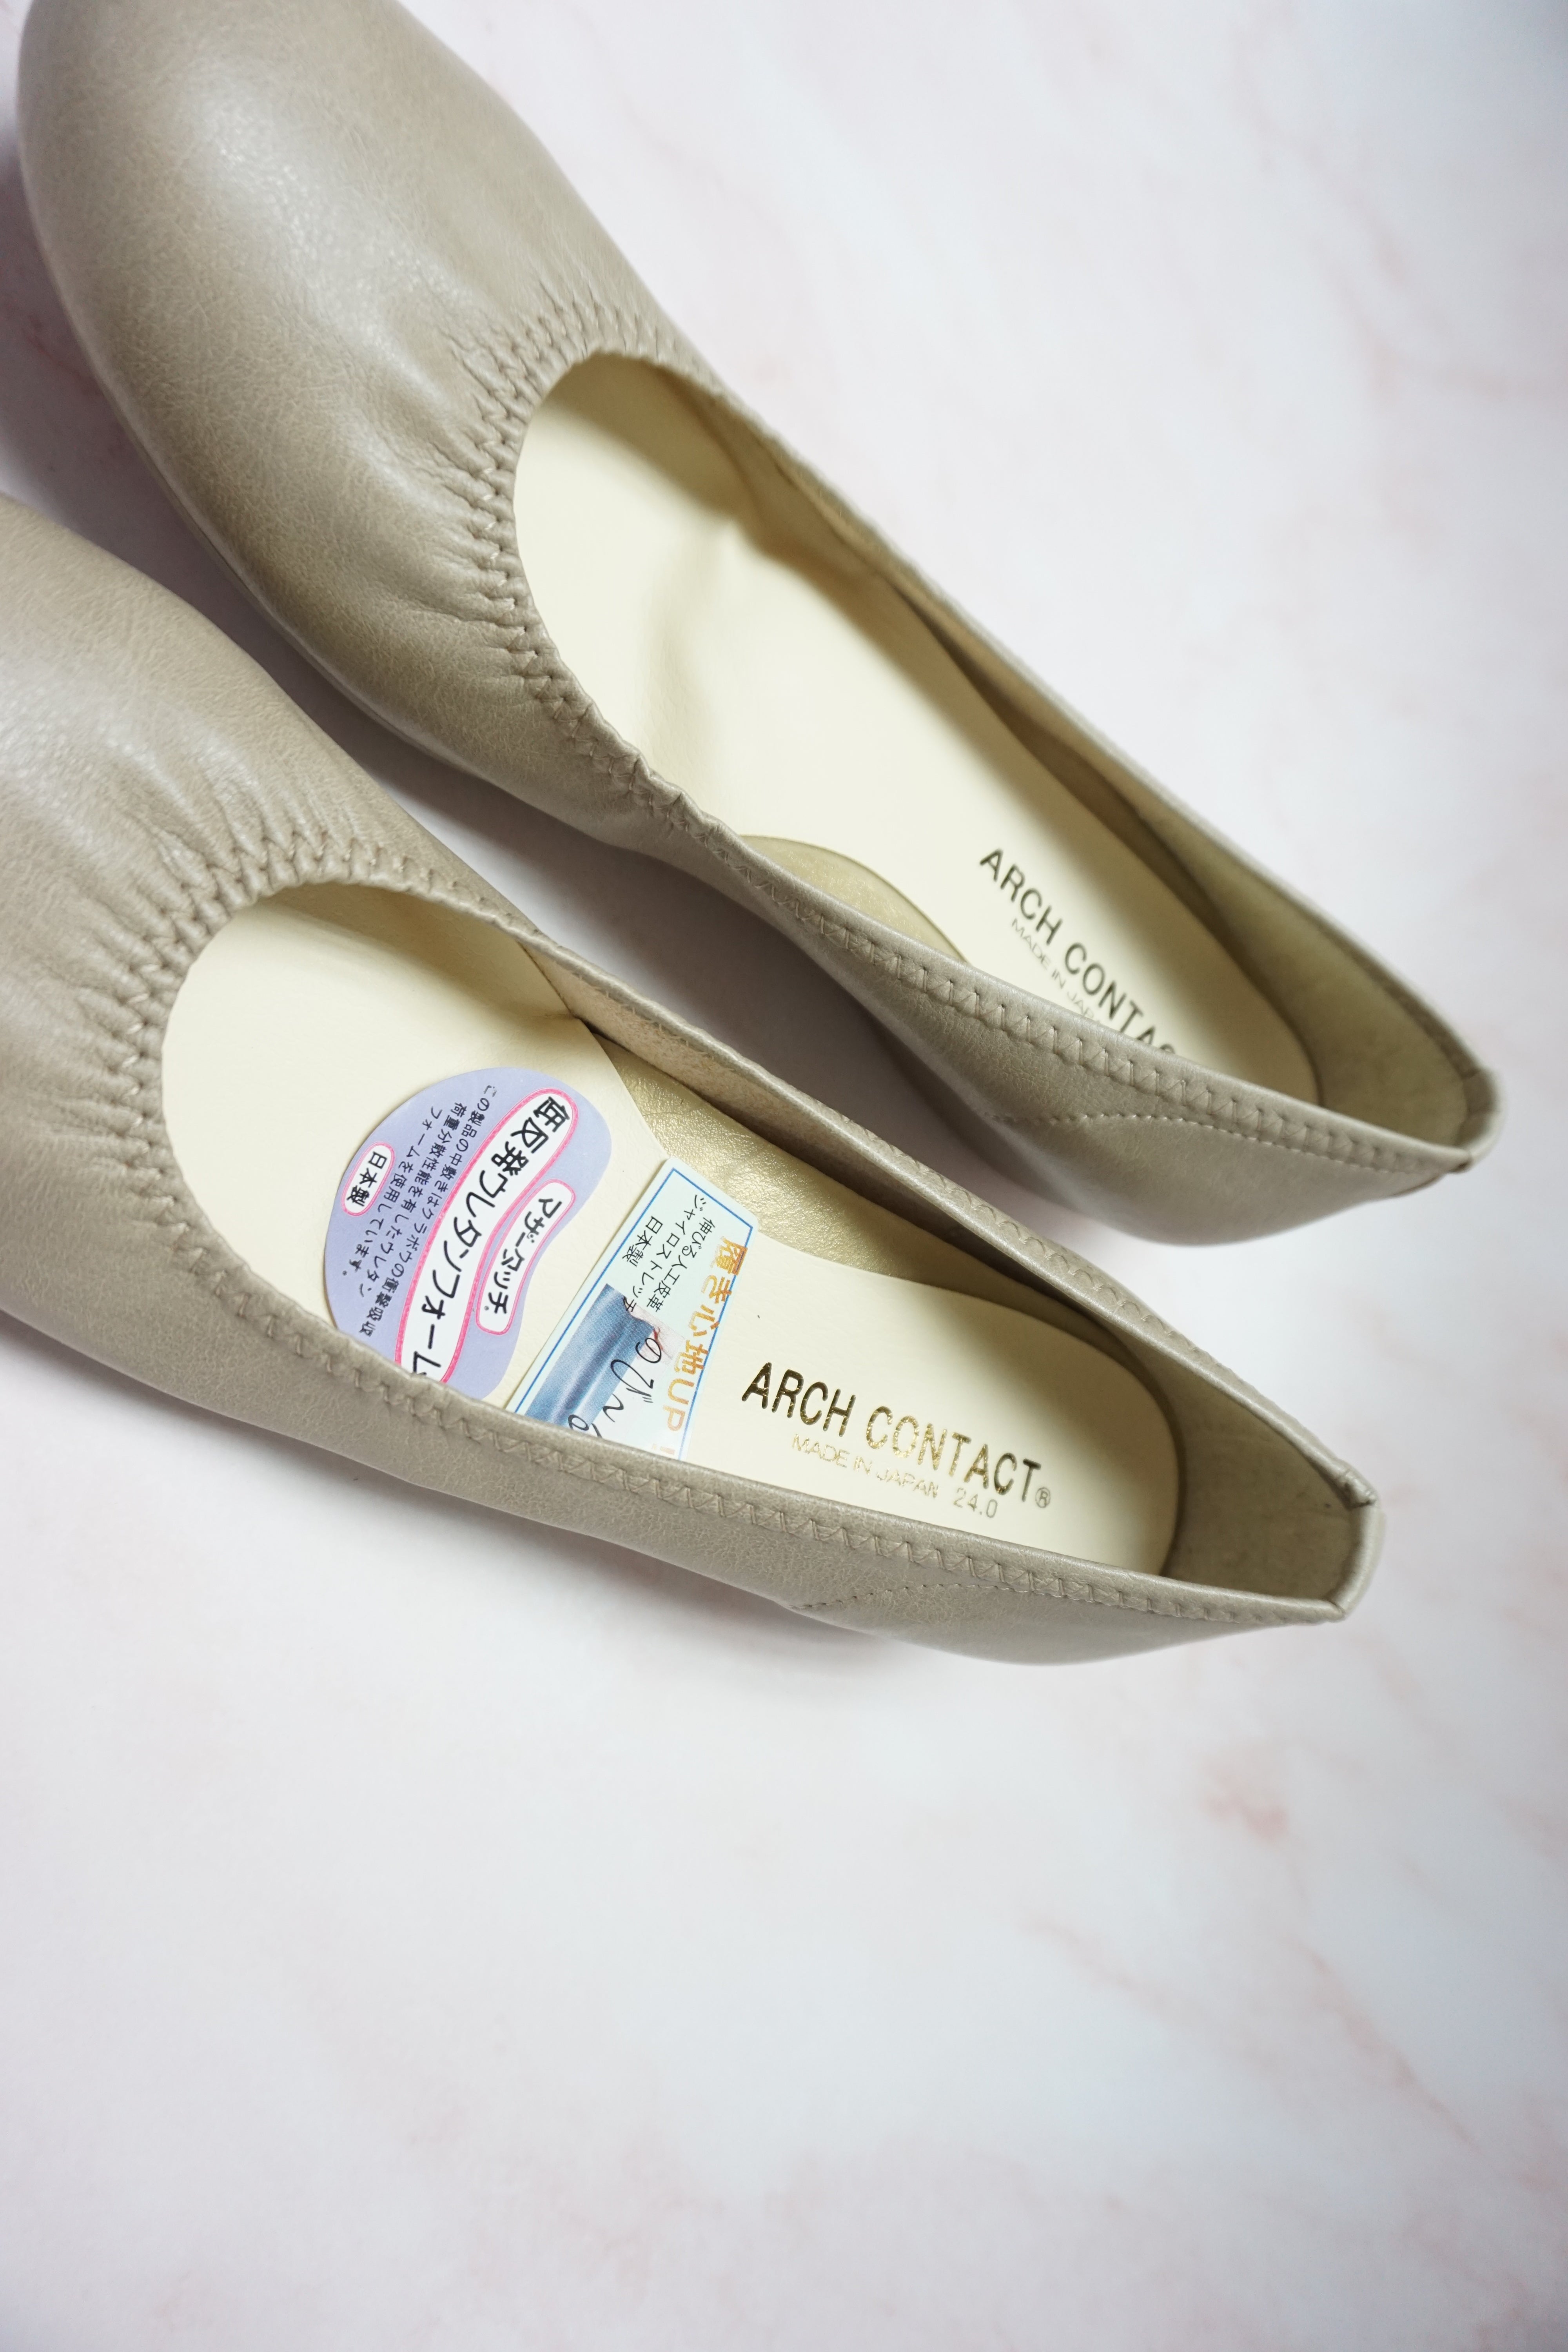 Japan Style Water Proof Flats-ARCH CONTACT-BE-JP/TW Size-1: 230-偉豐鞋 WELL SHOE HK-Well Shoe-偉豐鞋-偉豐網-荃灣鞋店-Functional shoes-Hong Kong Tsuen Wan Shoe Store-Tai Wan Shoe-Japan Shoe-高品質功能鞋-台灣進口鞋-日本進口鞋-High-quality shoes-鞋類配件-荃灣進口鞋-香港鞋店-優質鞋類產品-水靴-帆布鞋-廚師鞋-香港鞋品牌-Hong Kong Shoes brand-長者鞋-Hong Kong Rain Boots-Kitchen shoes-Cruthes-Slipper-Well Shoe Hong Kong-Anello-Arriba-休閒鞋-舒適鞋-健康鞋-皮鞋-Healthy shoes-Leather shoes-Hiking shoes